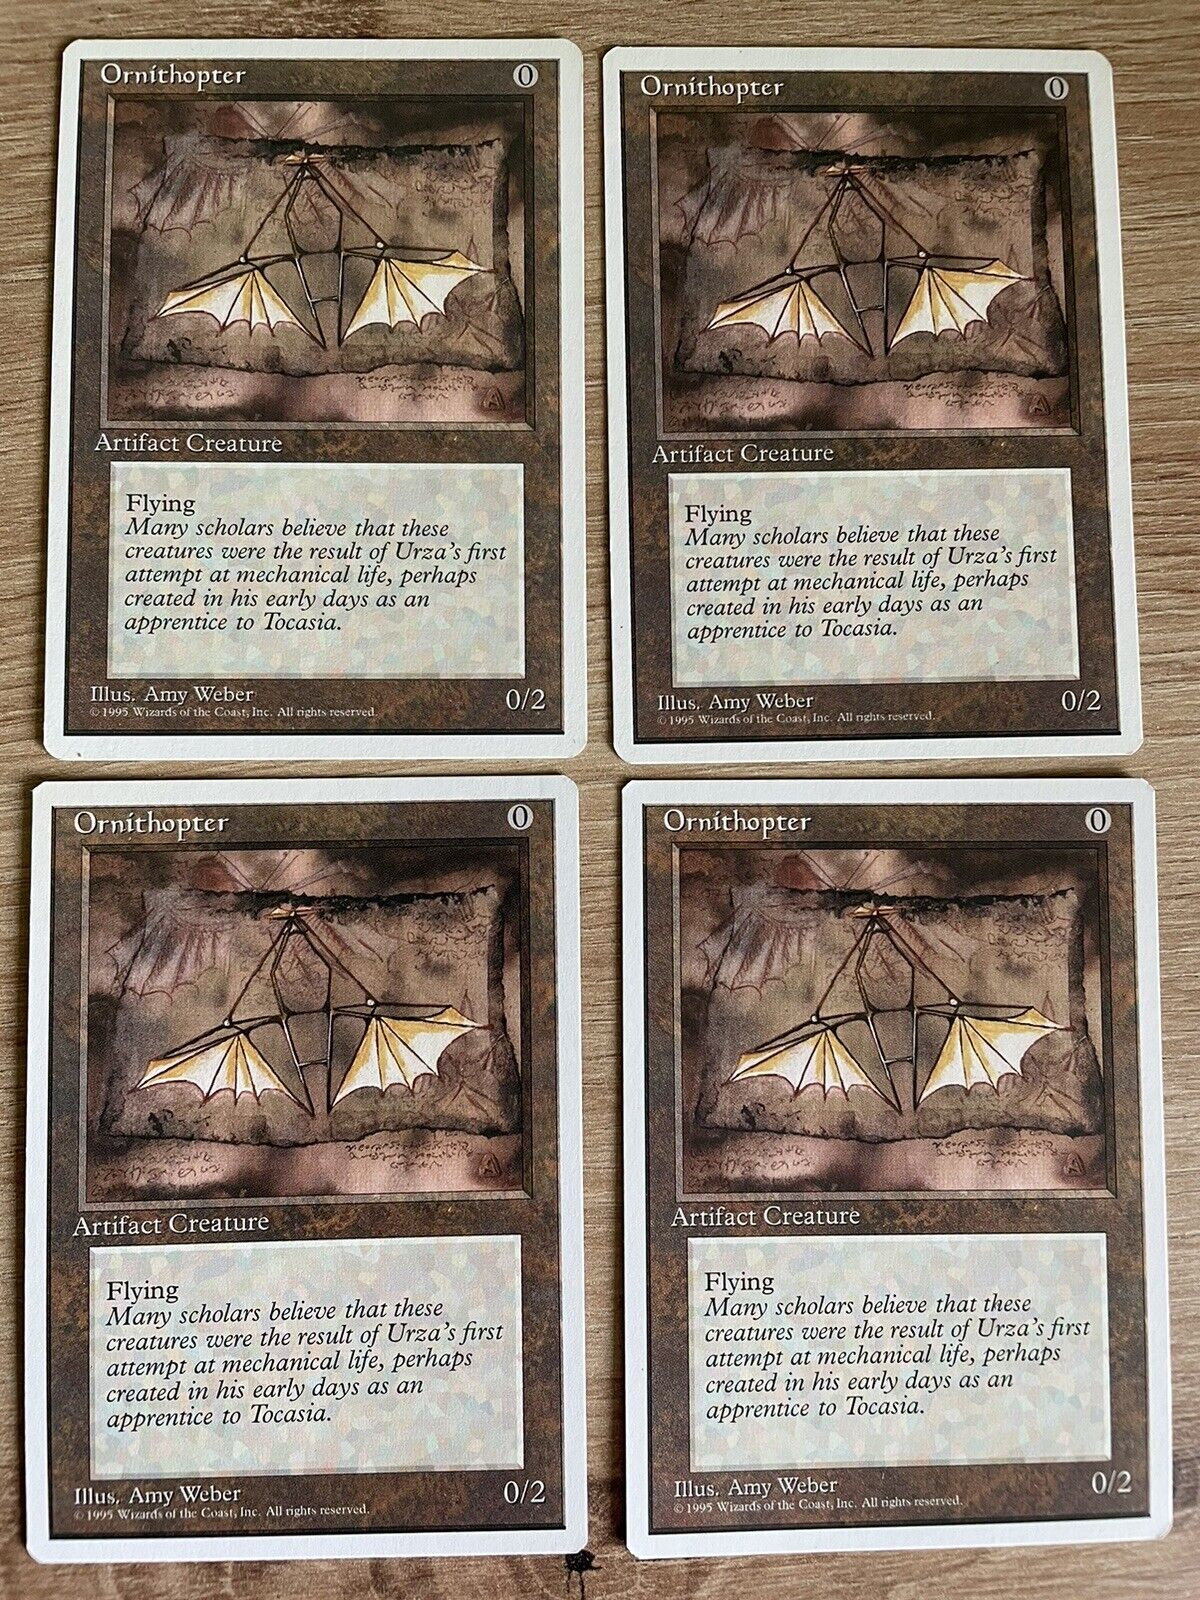 4 x Ornithopter (4th Edition), GD/EX German, Magic Card MtG 0 Mana Artifact